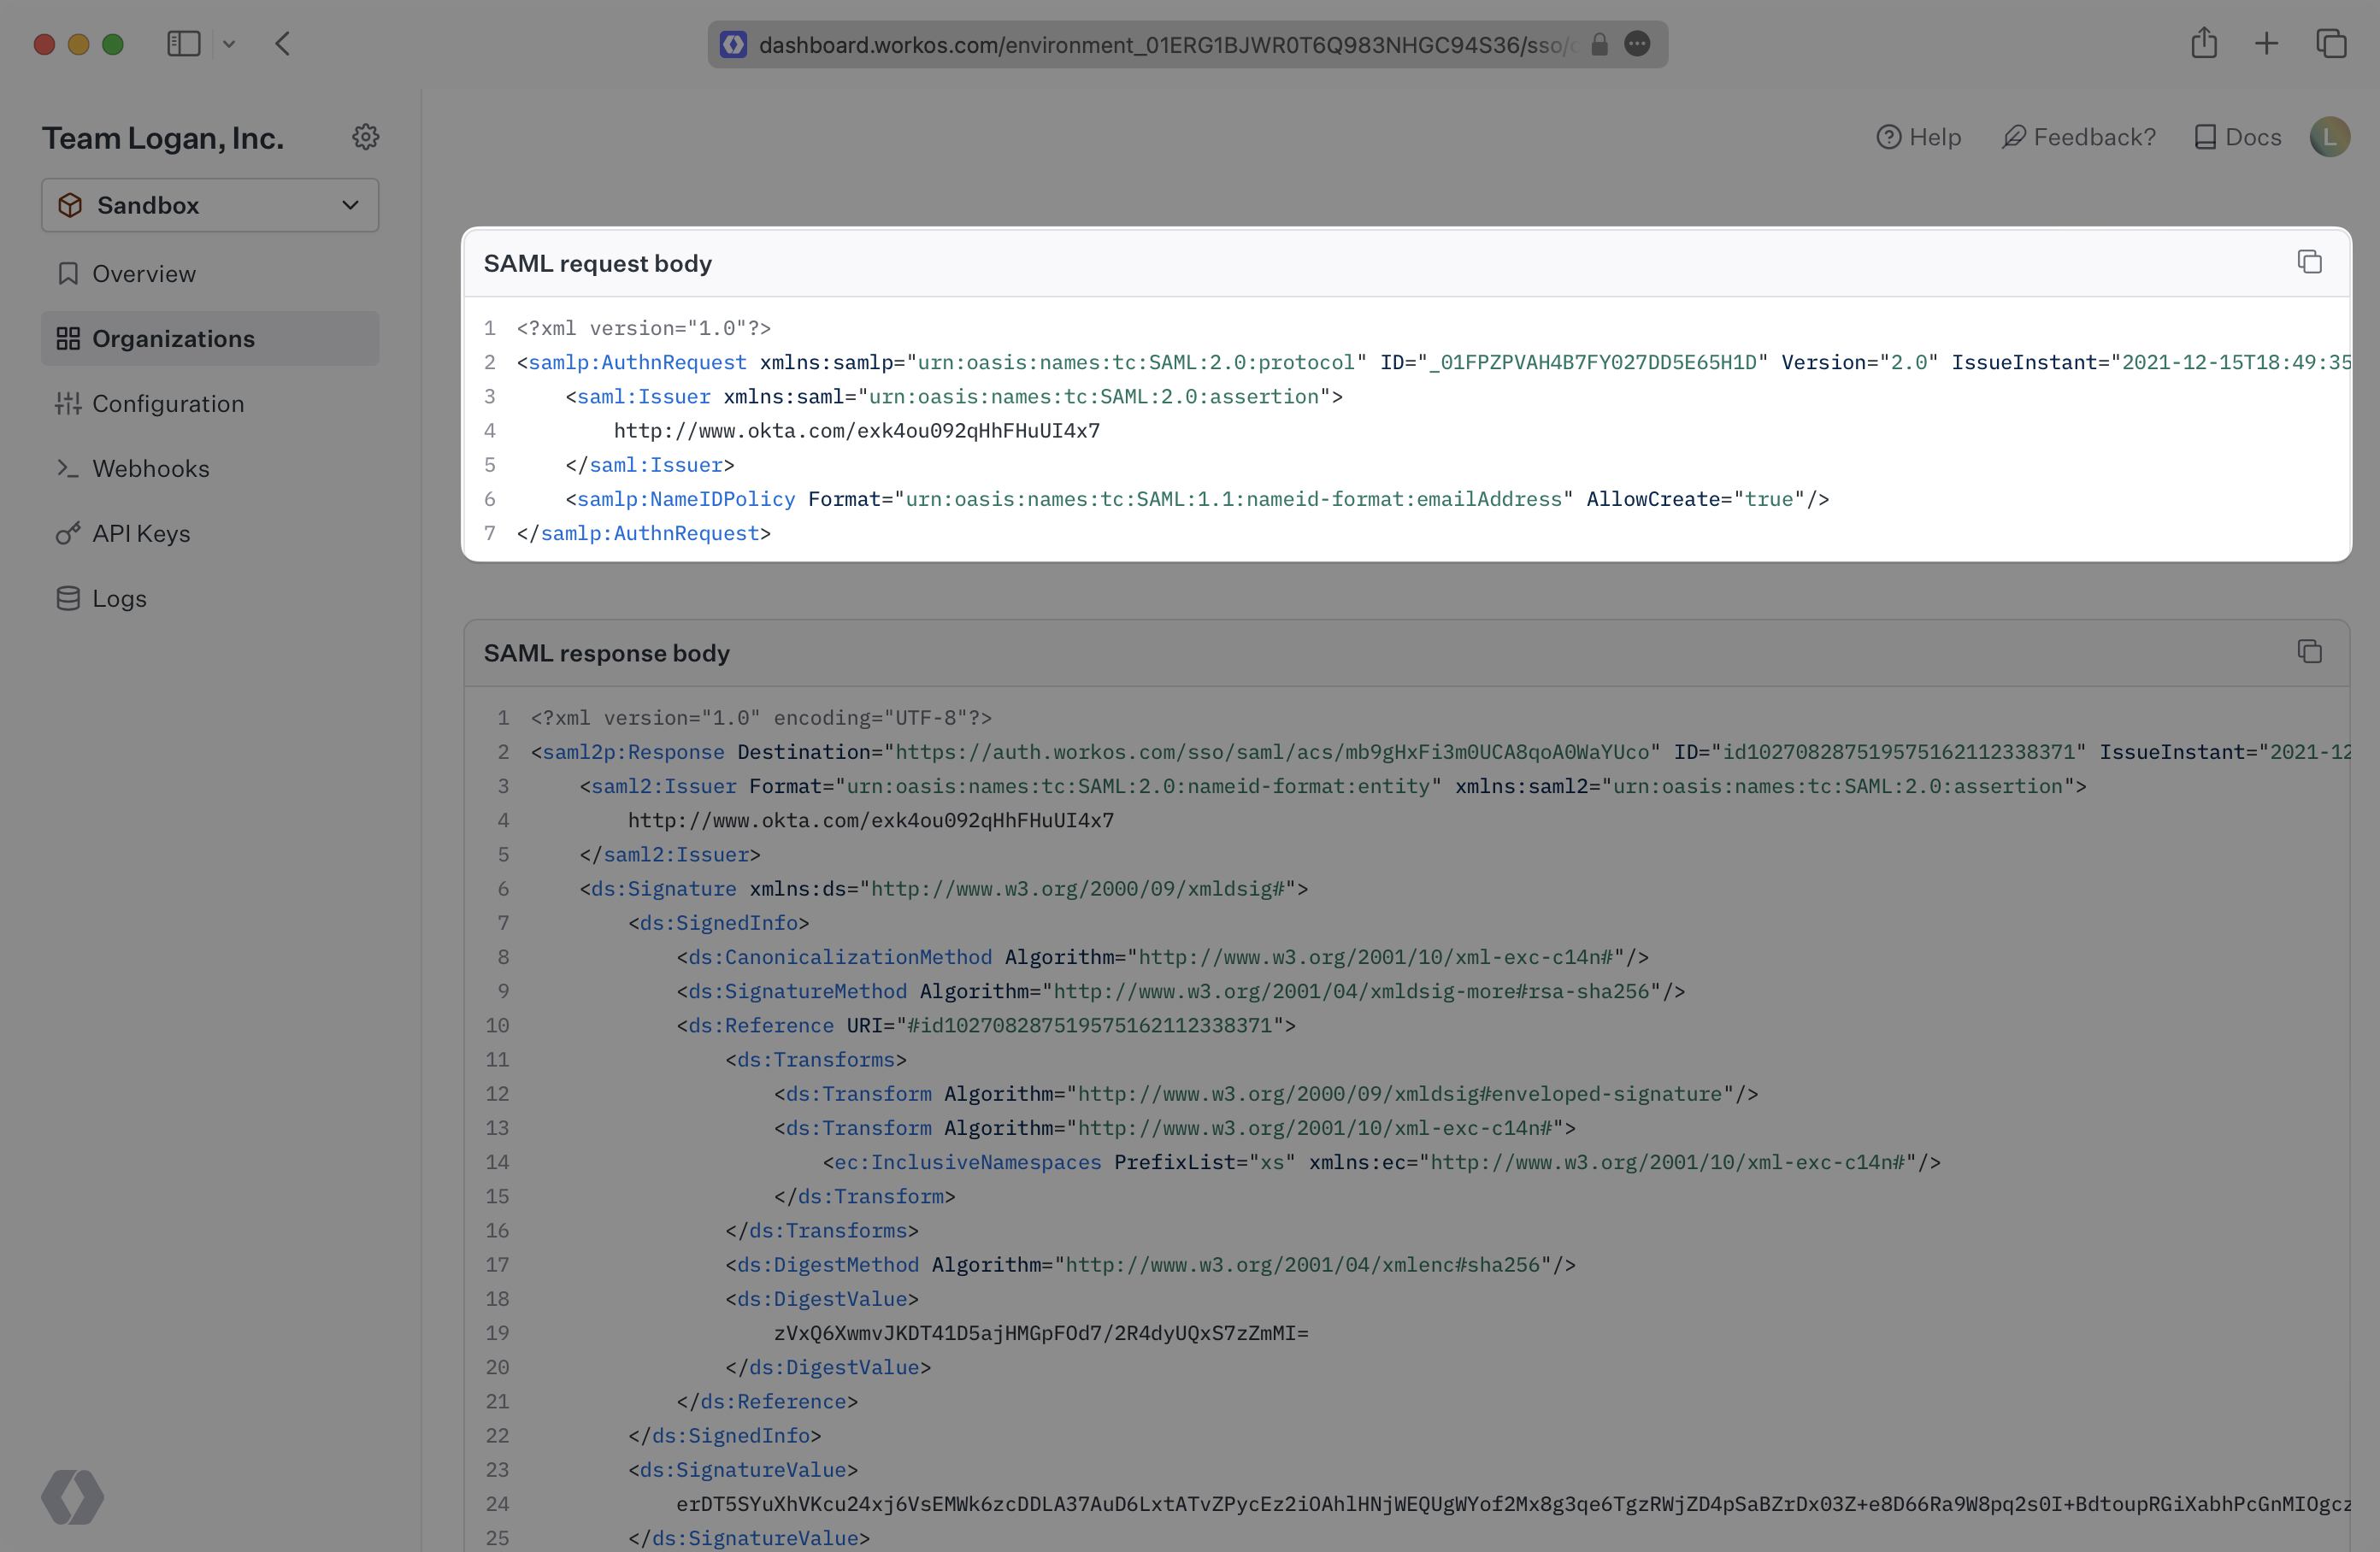 A screenshot showing a SAML Request Body in the WorkOS Dashboard.